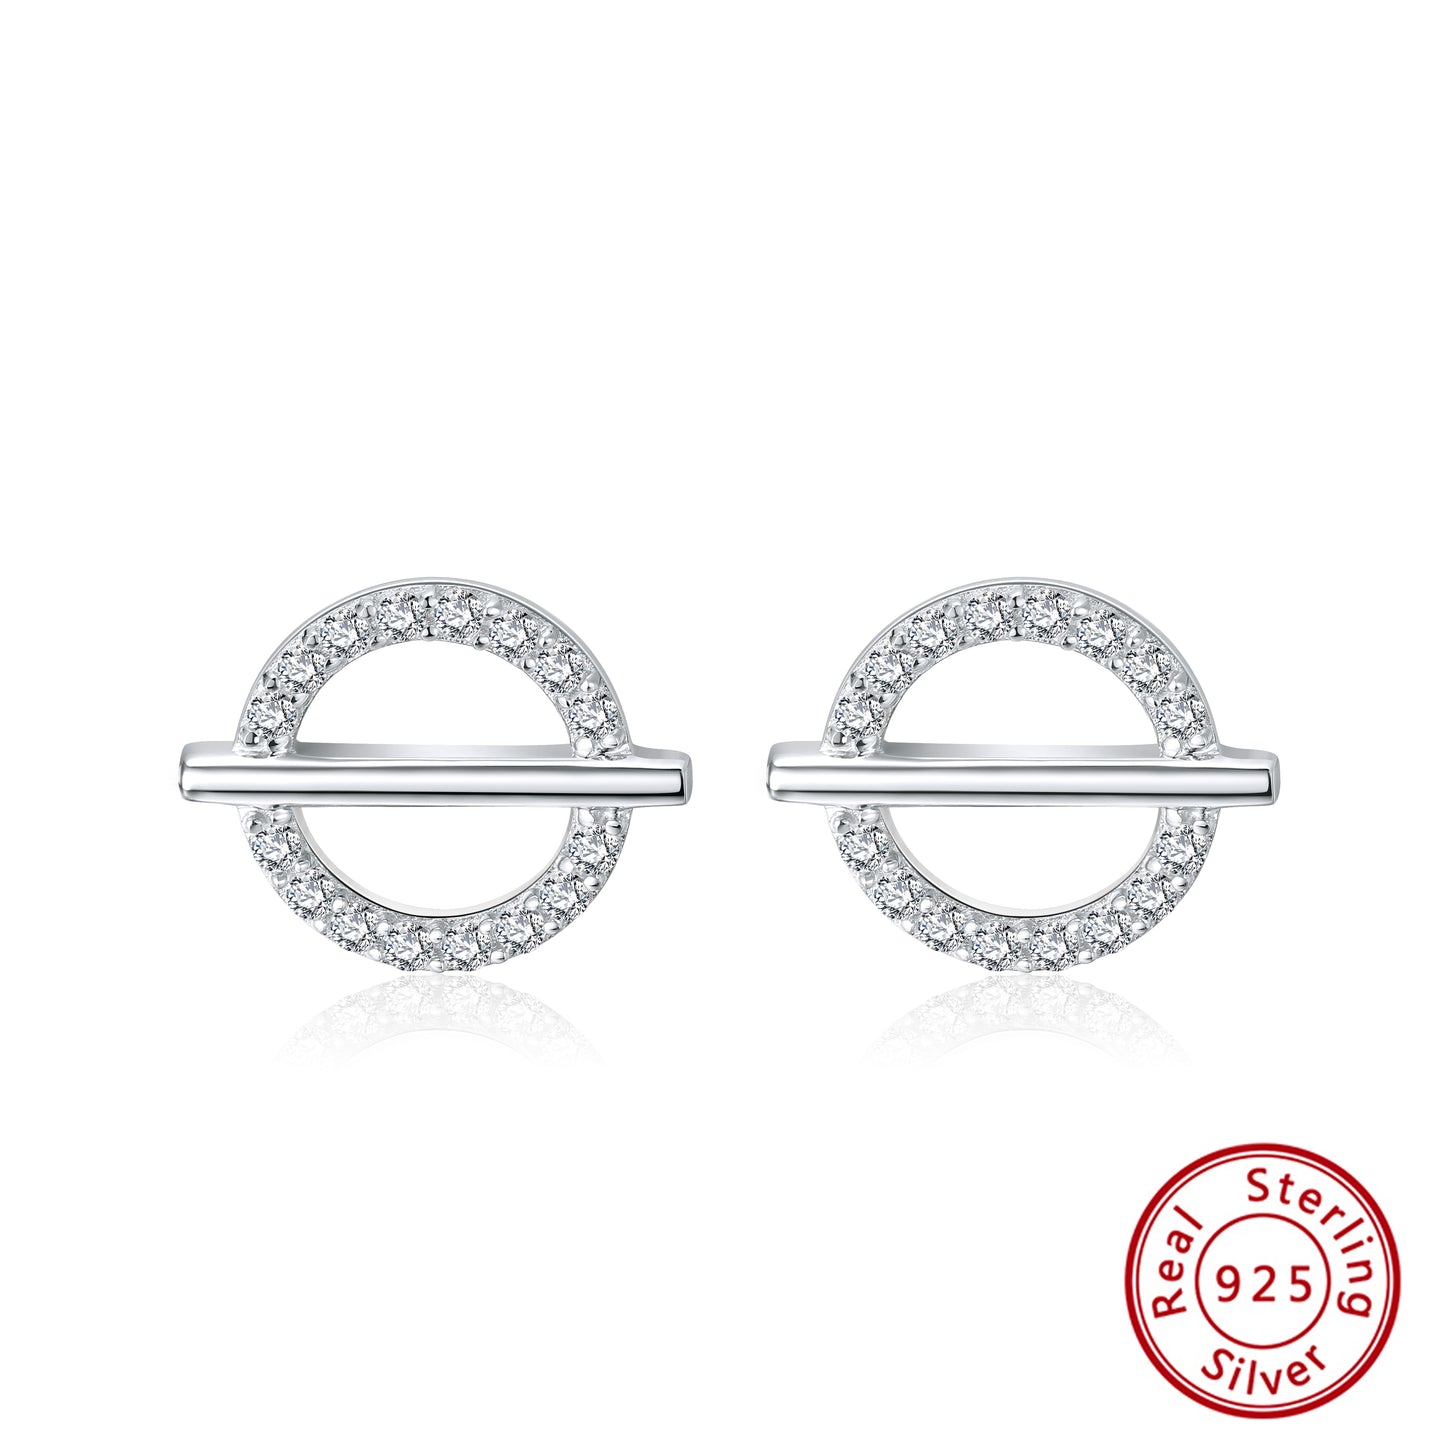 Rhodium Plated Cut Circle Earrings, affordable rhodium plated silver earrings